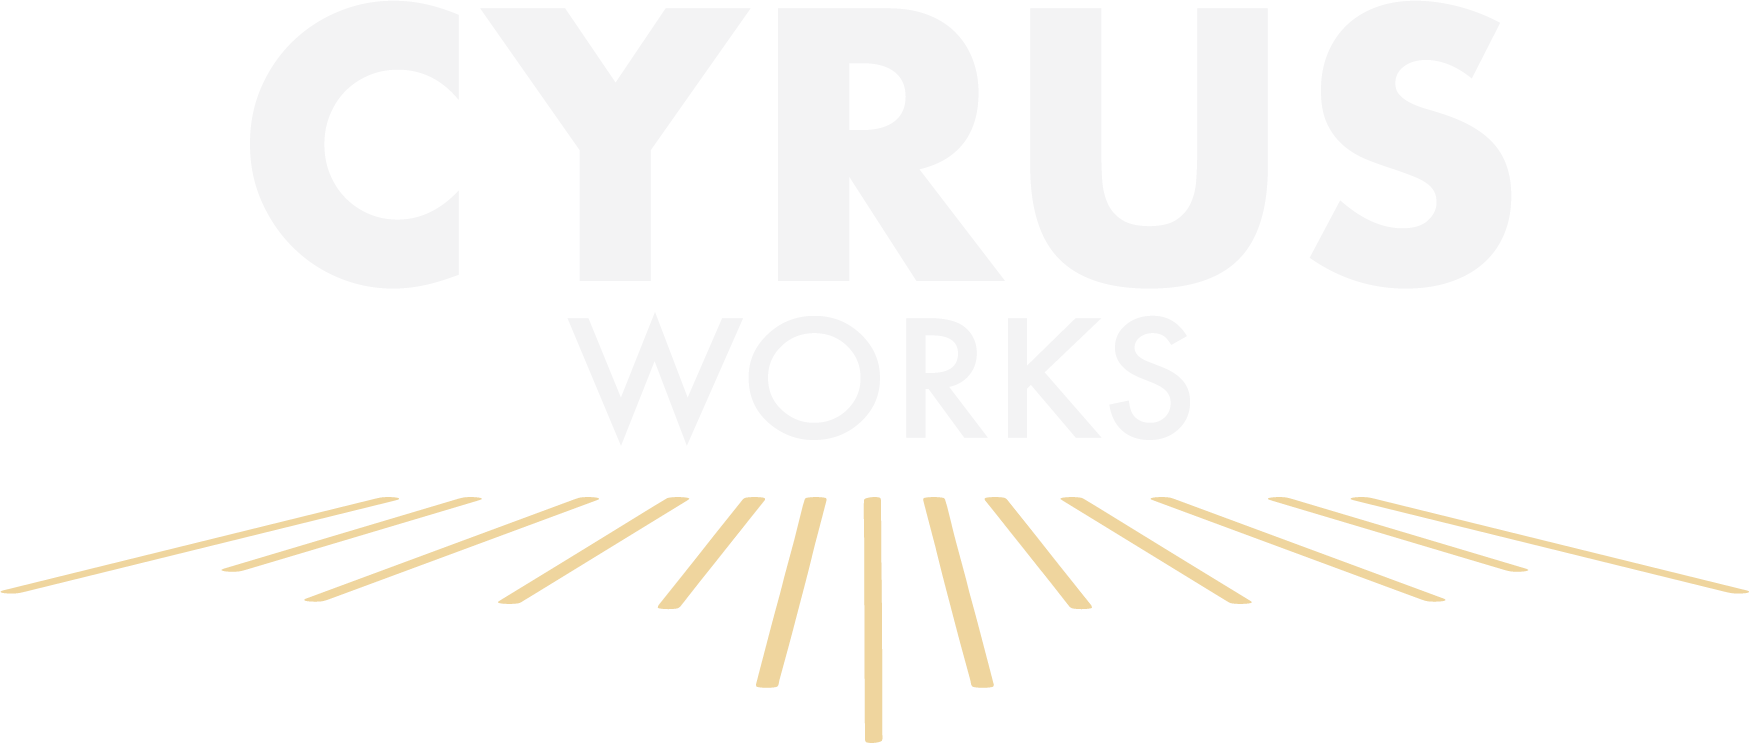 Cyrus Works